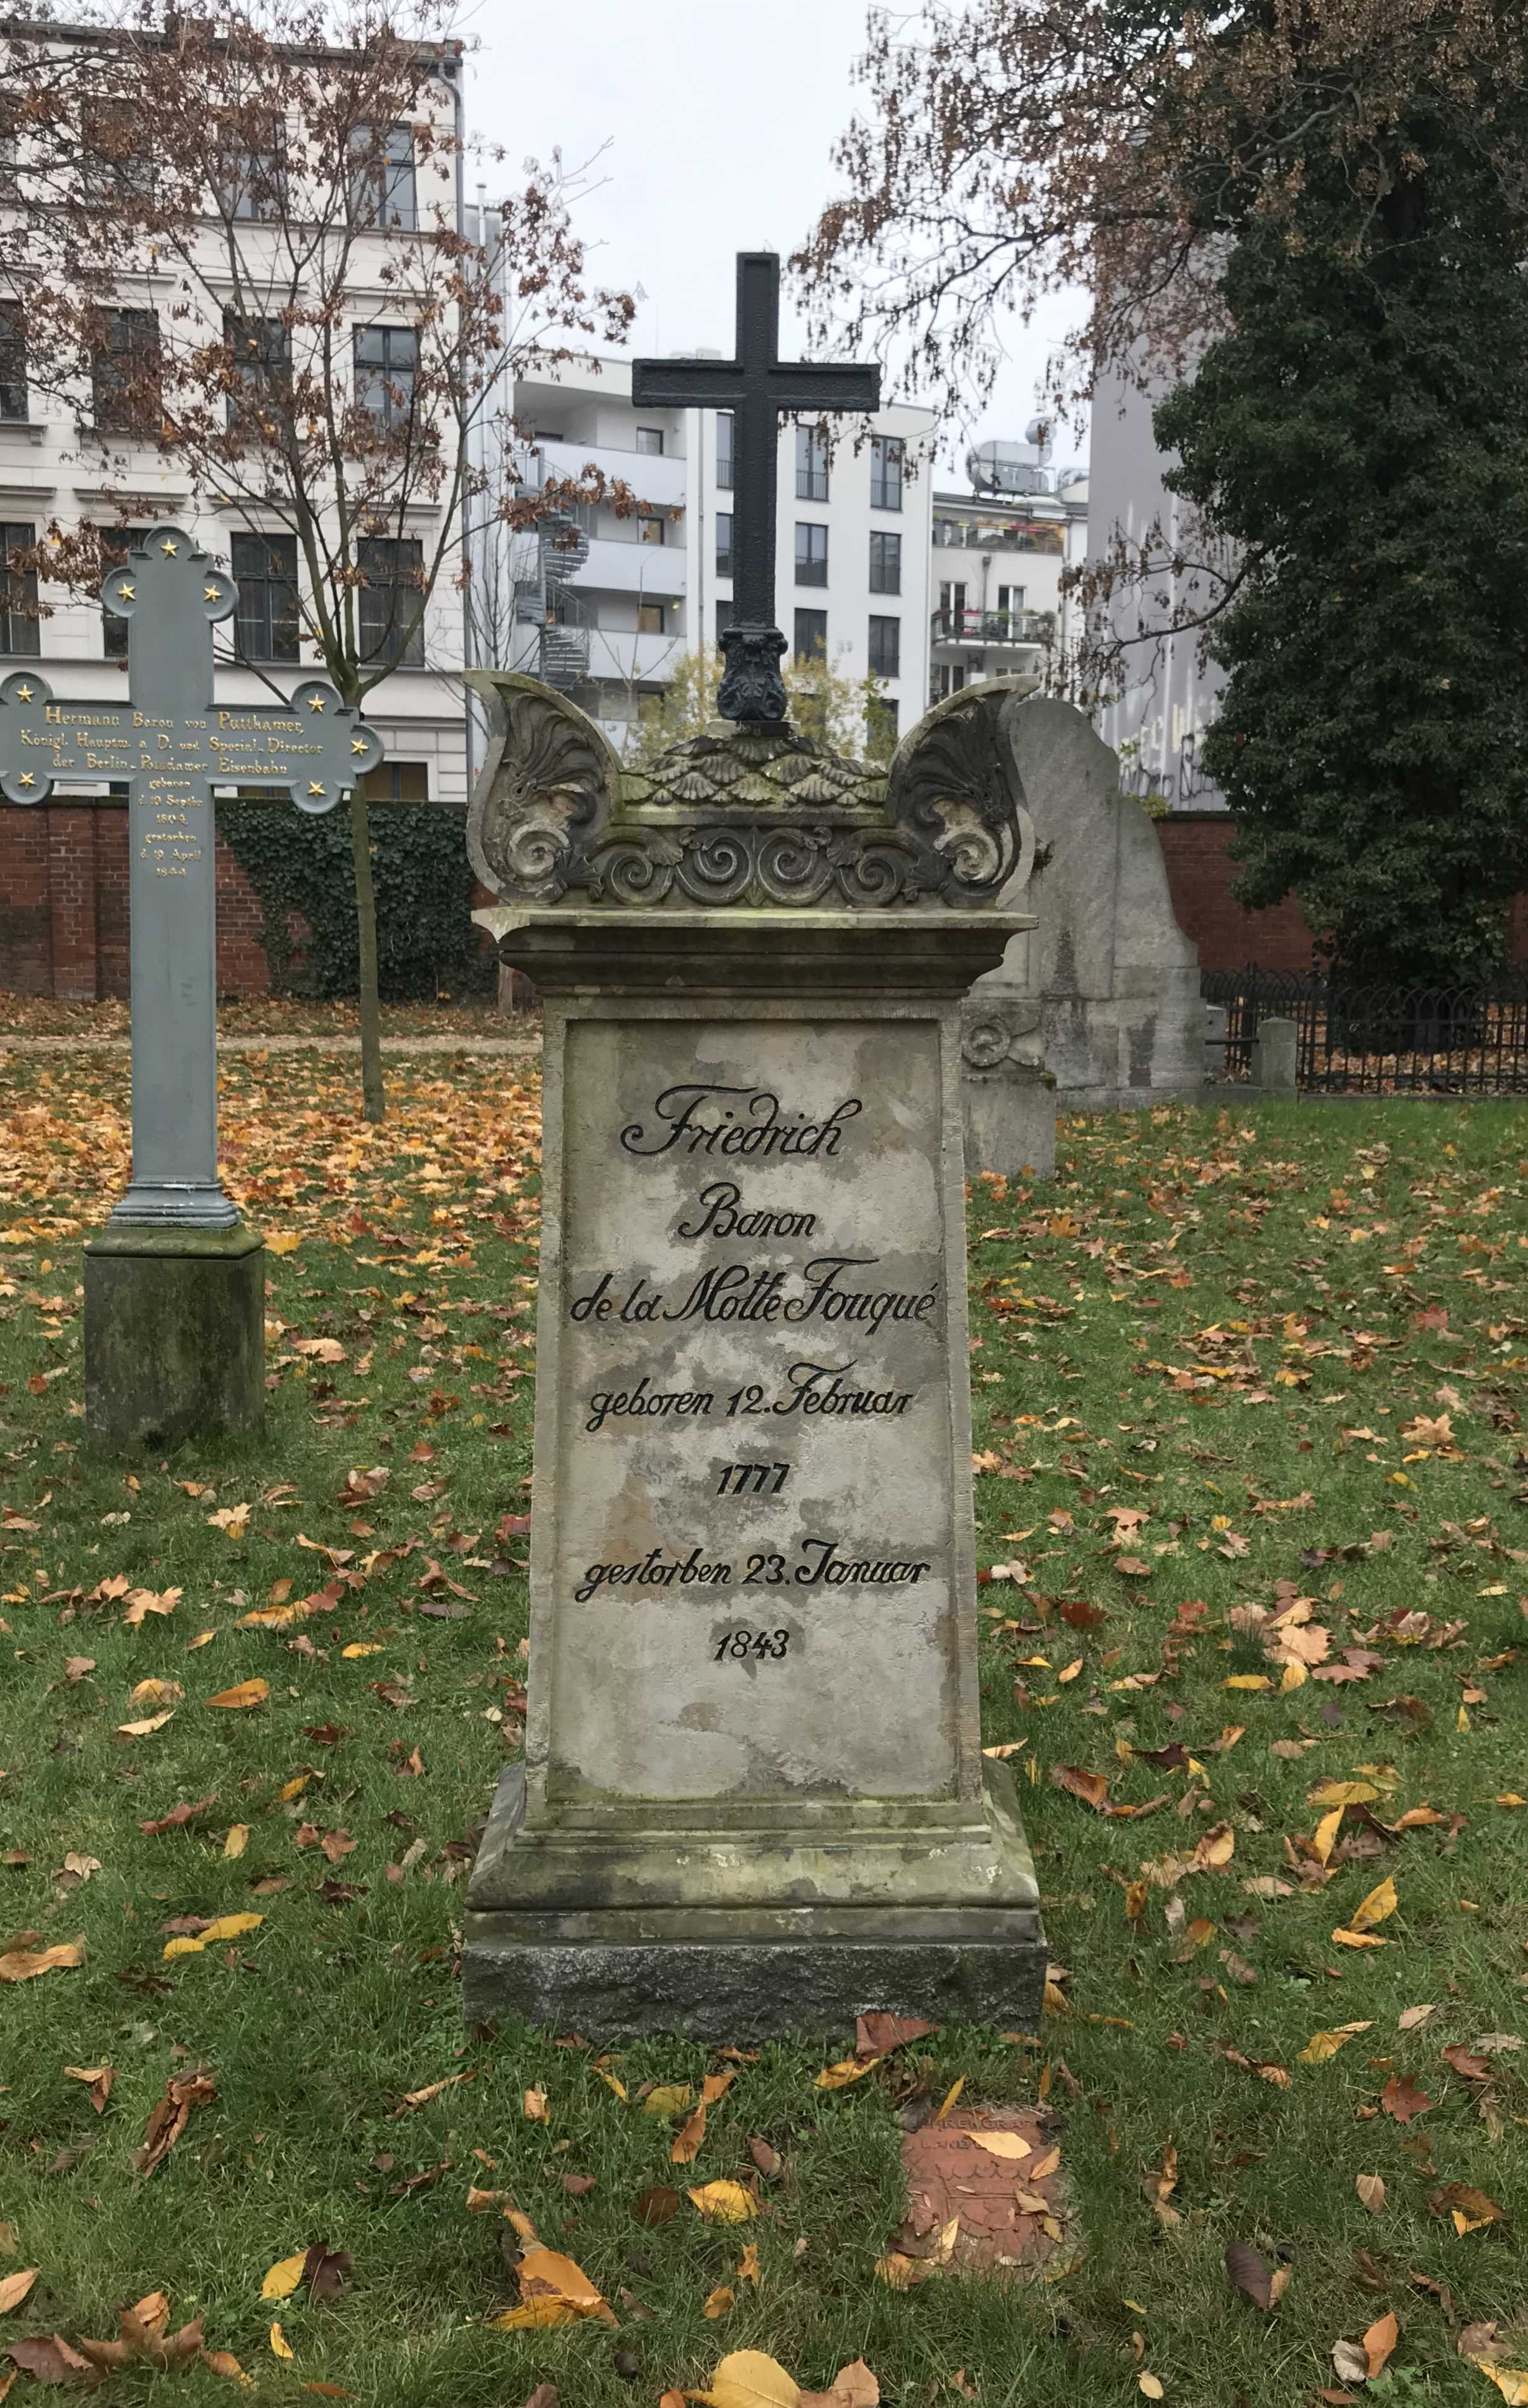 Grabstein Friedrich Baron de la Motte-Fouqué, Alter Garnisonfriedhof Berlin